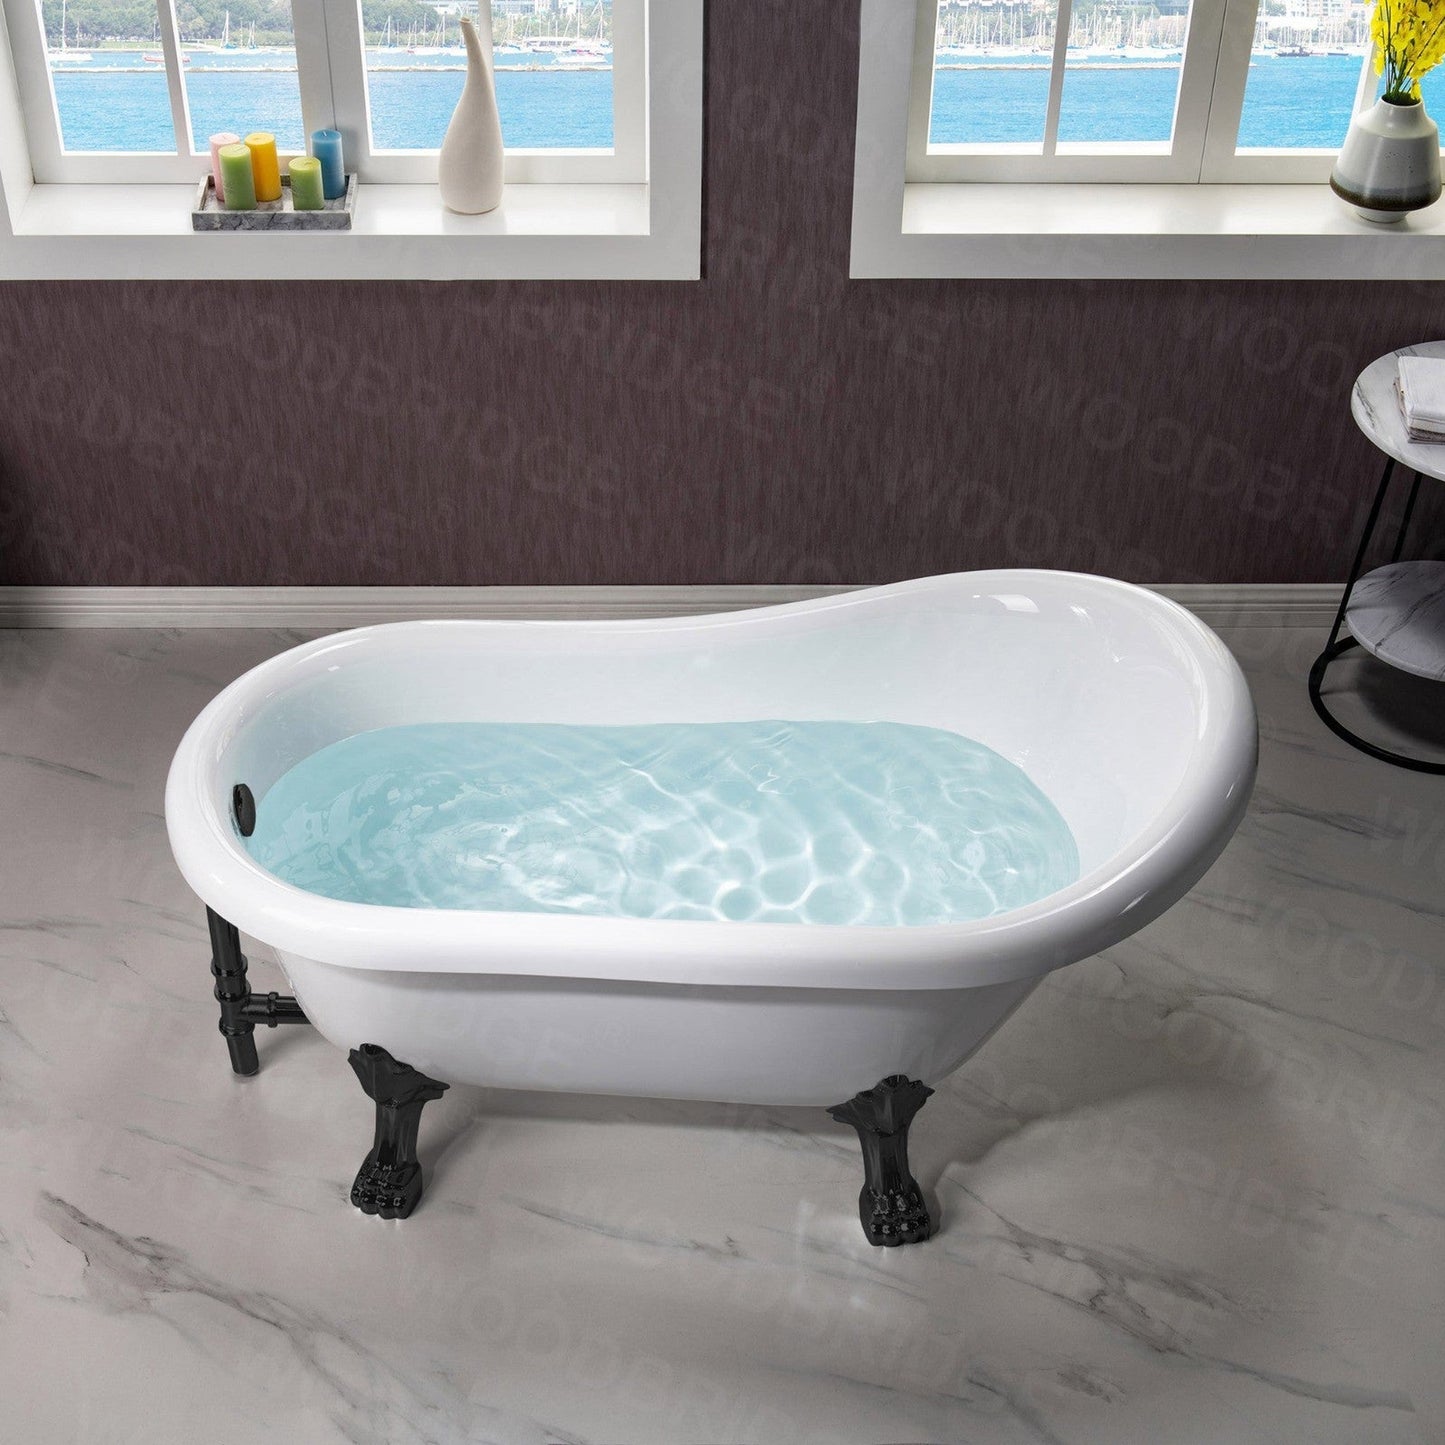 WoodBridge 54" White Acrylic Slipper Clawfoot Bath Tub With Matte Black Feet, Drain, Overflow, F0072MBVT Tub Filler and Caddy Tray